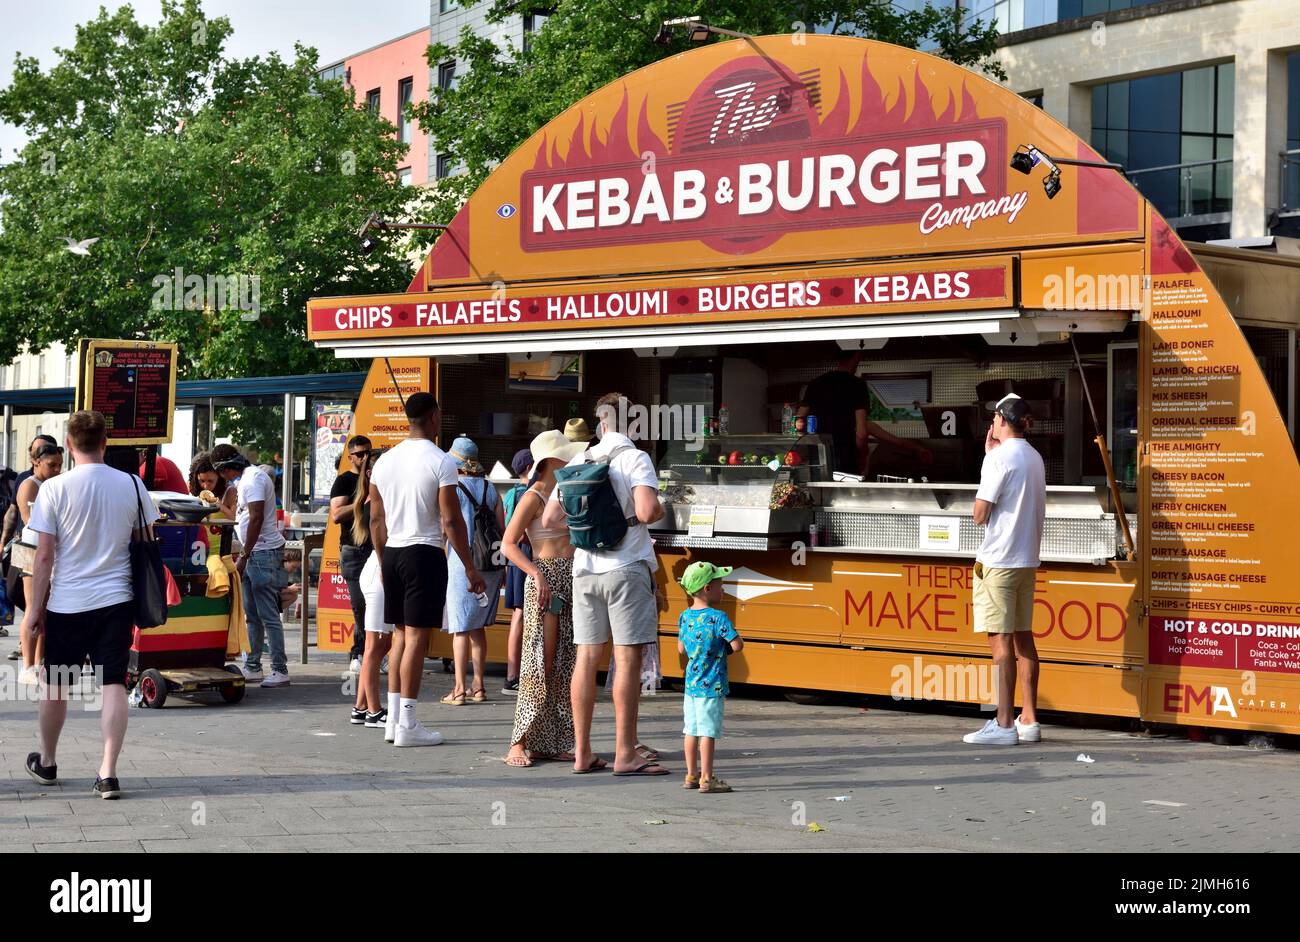 Bristol City Center fast food à emporter stall vendant kebabs et hamburgers, Royaume-Uni Banque D'Images